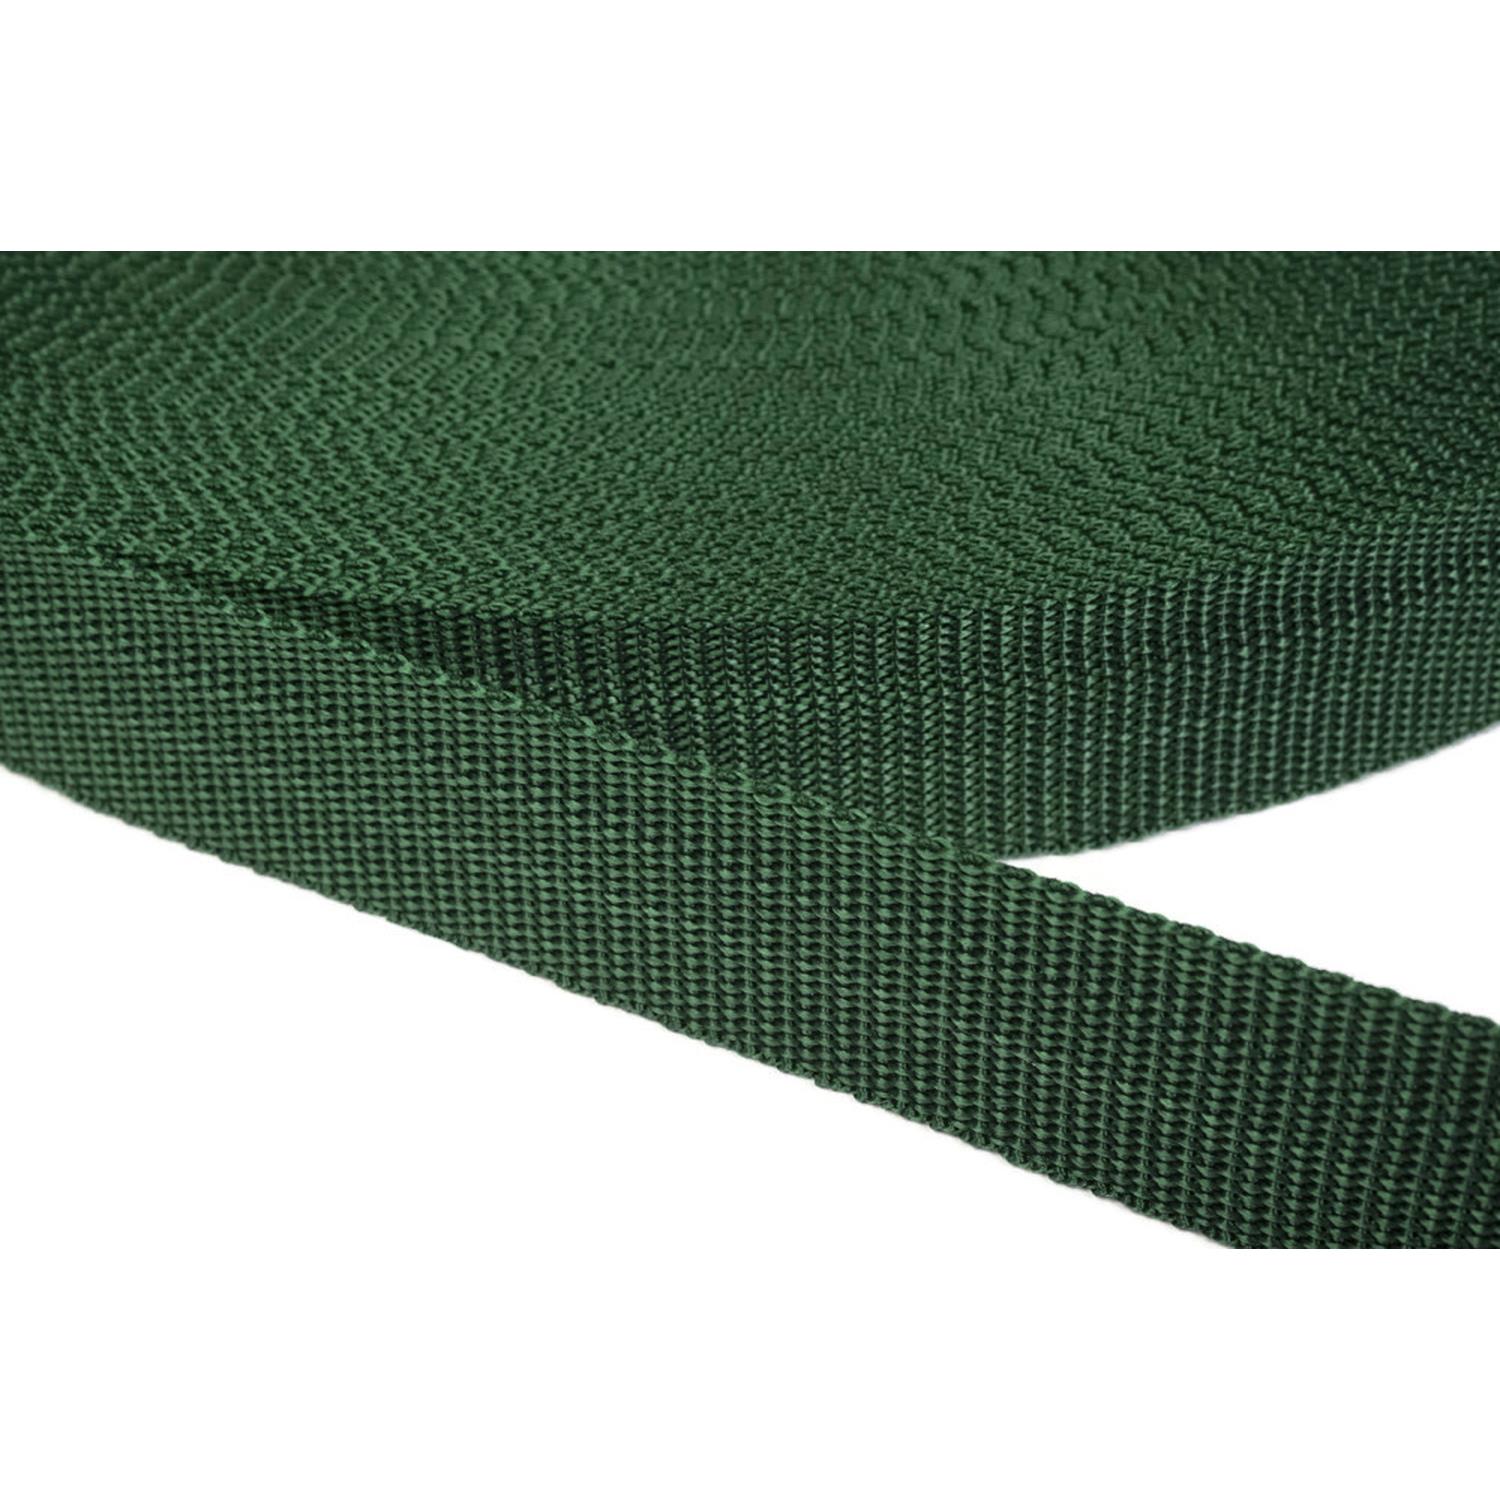 Gurtband 15mm breit aus Polypropylen in 41 Farben 35 - dunkelgrün 12 Meter